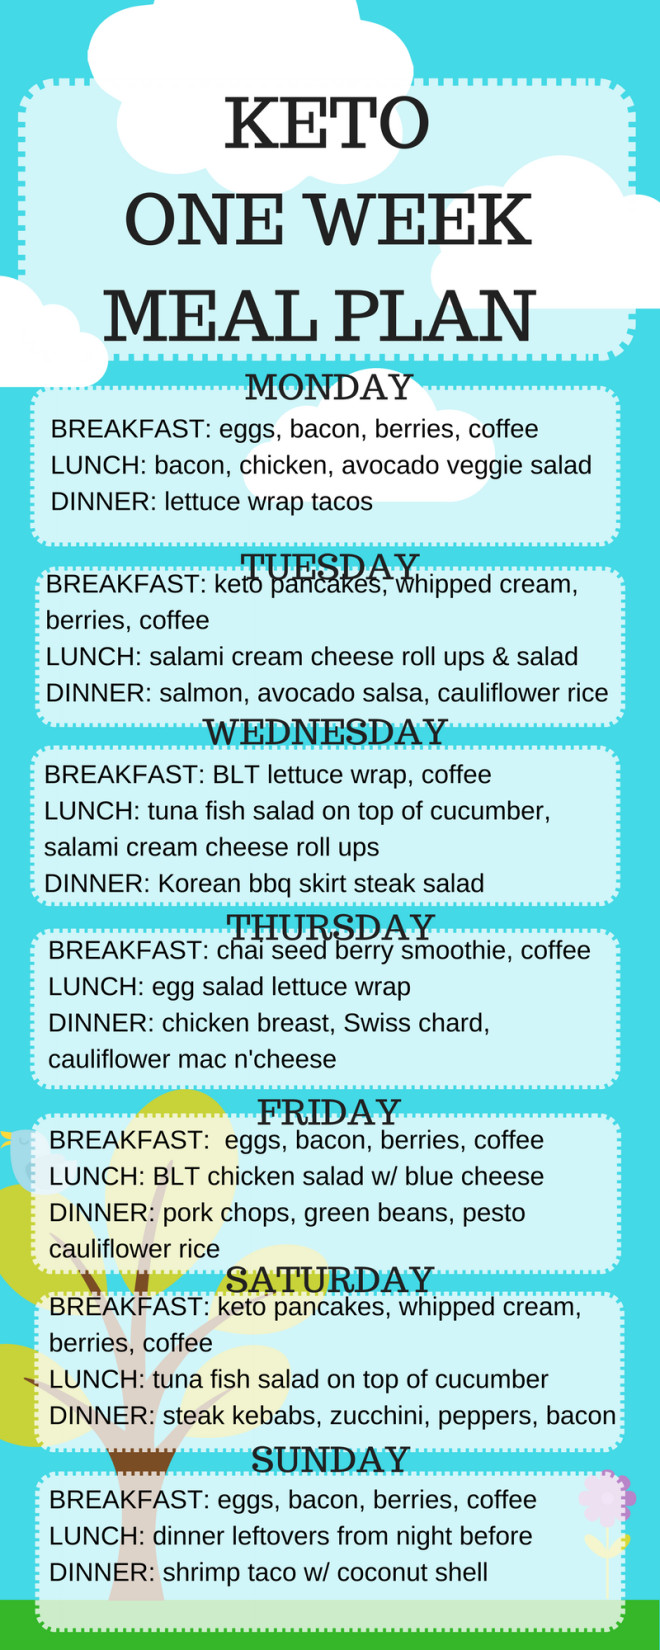 Keto Diet For Beginners Meal Plan Easy With Grocery List
 KETO ONE WEEK MEAL PLAN – SEASONAL SOLUTIONS